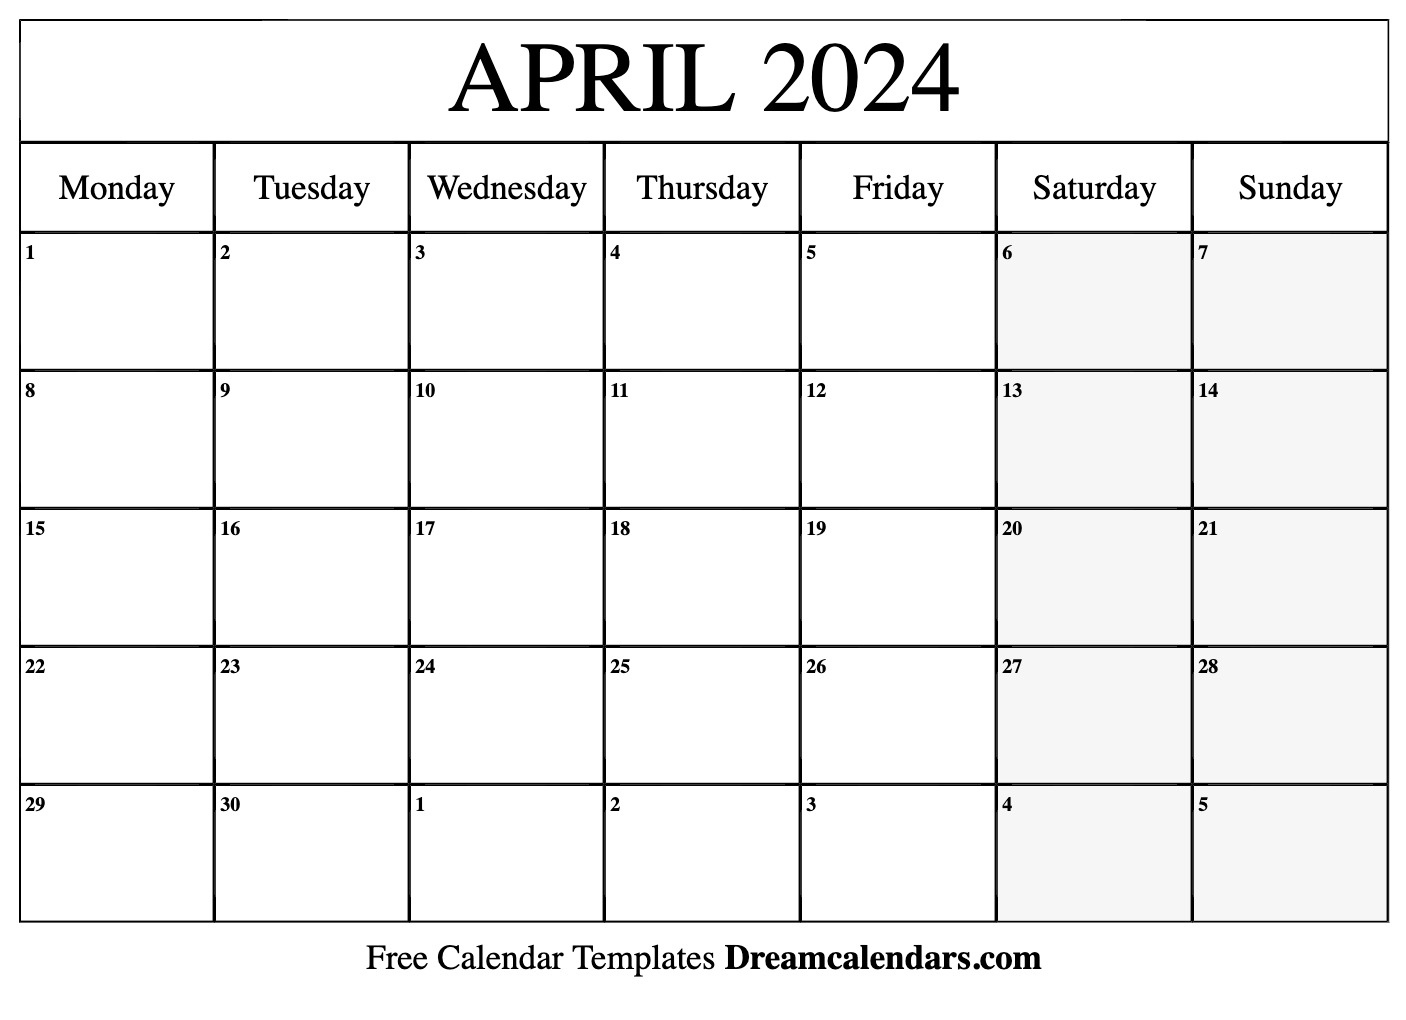 April 2024 Calendar | Free Blank Printable With Holidays for April Calendar Printable 2024